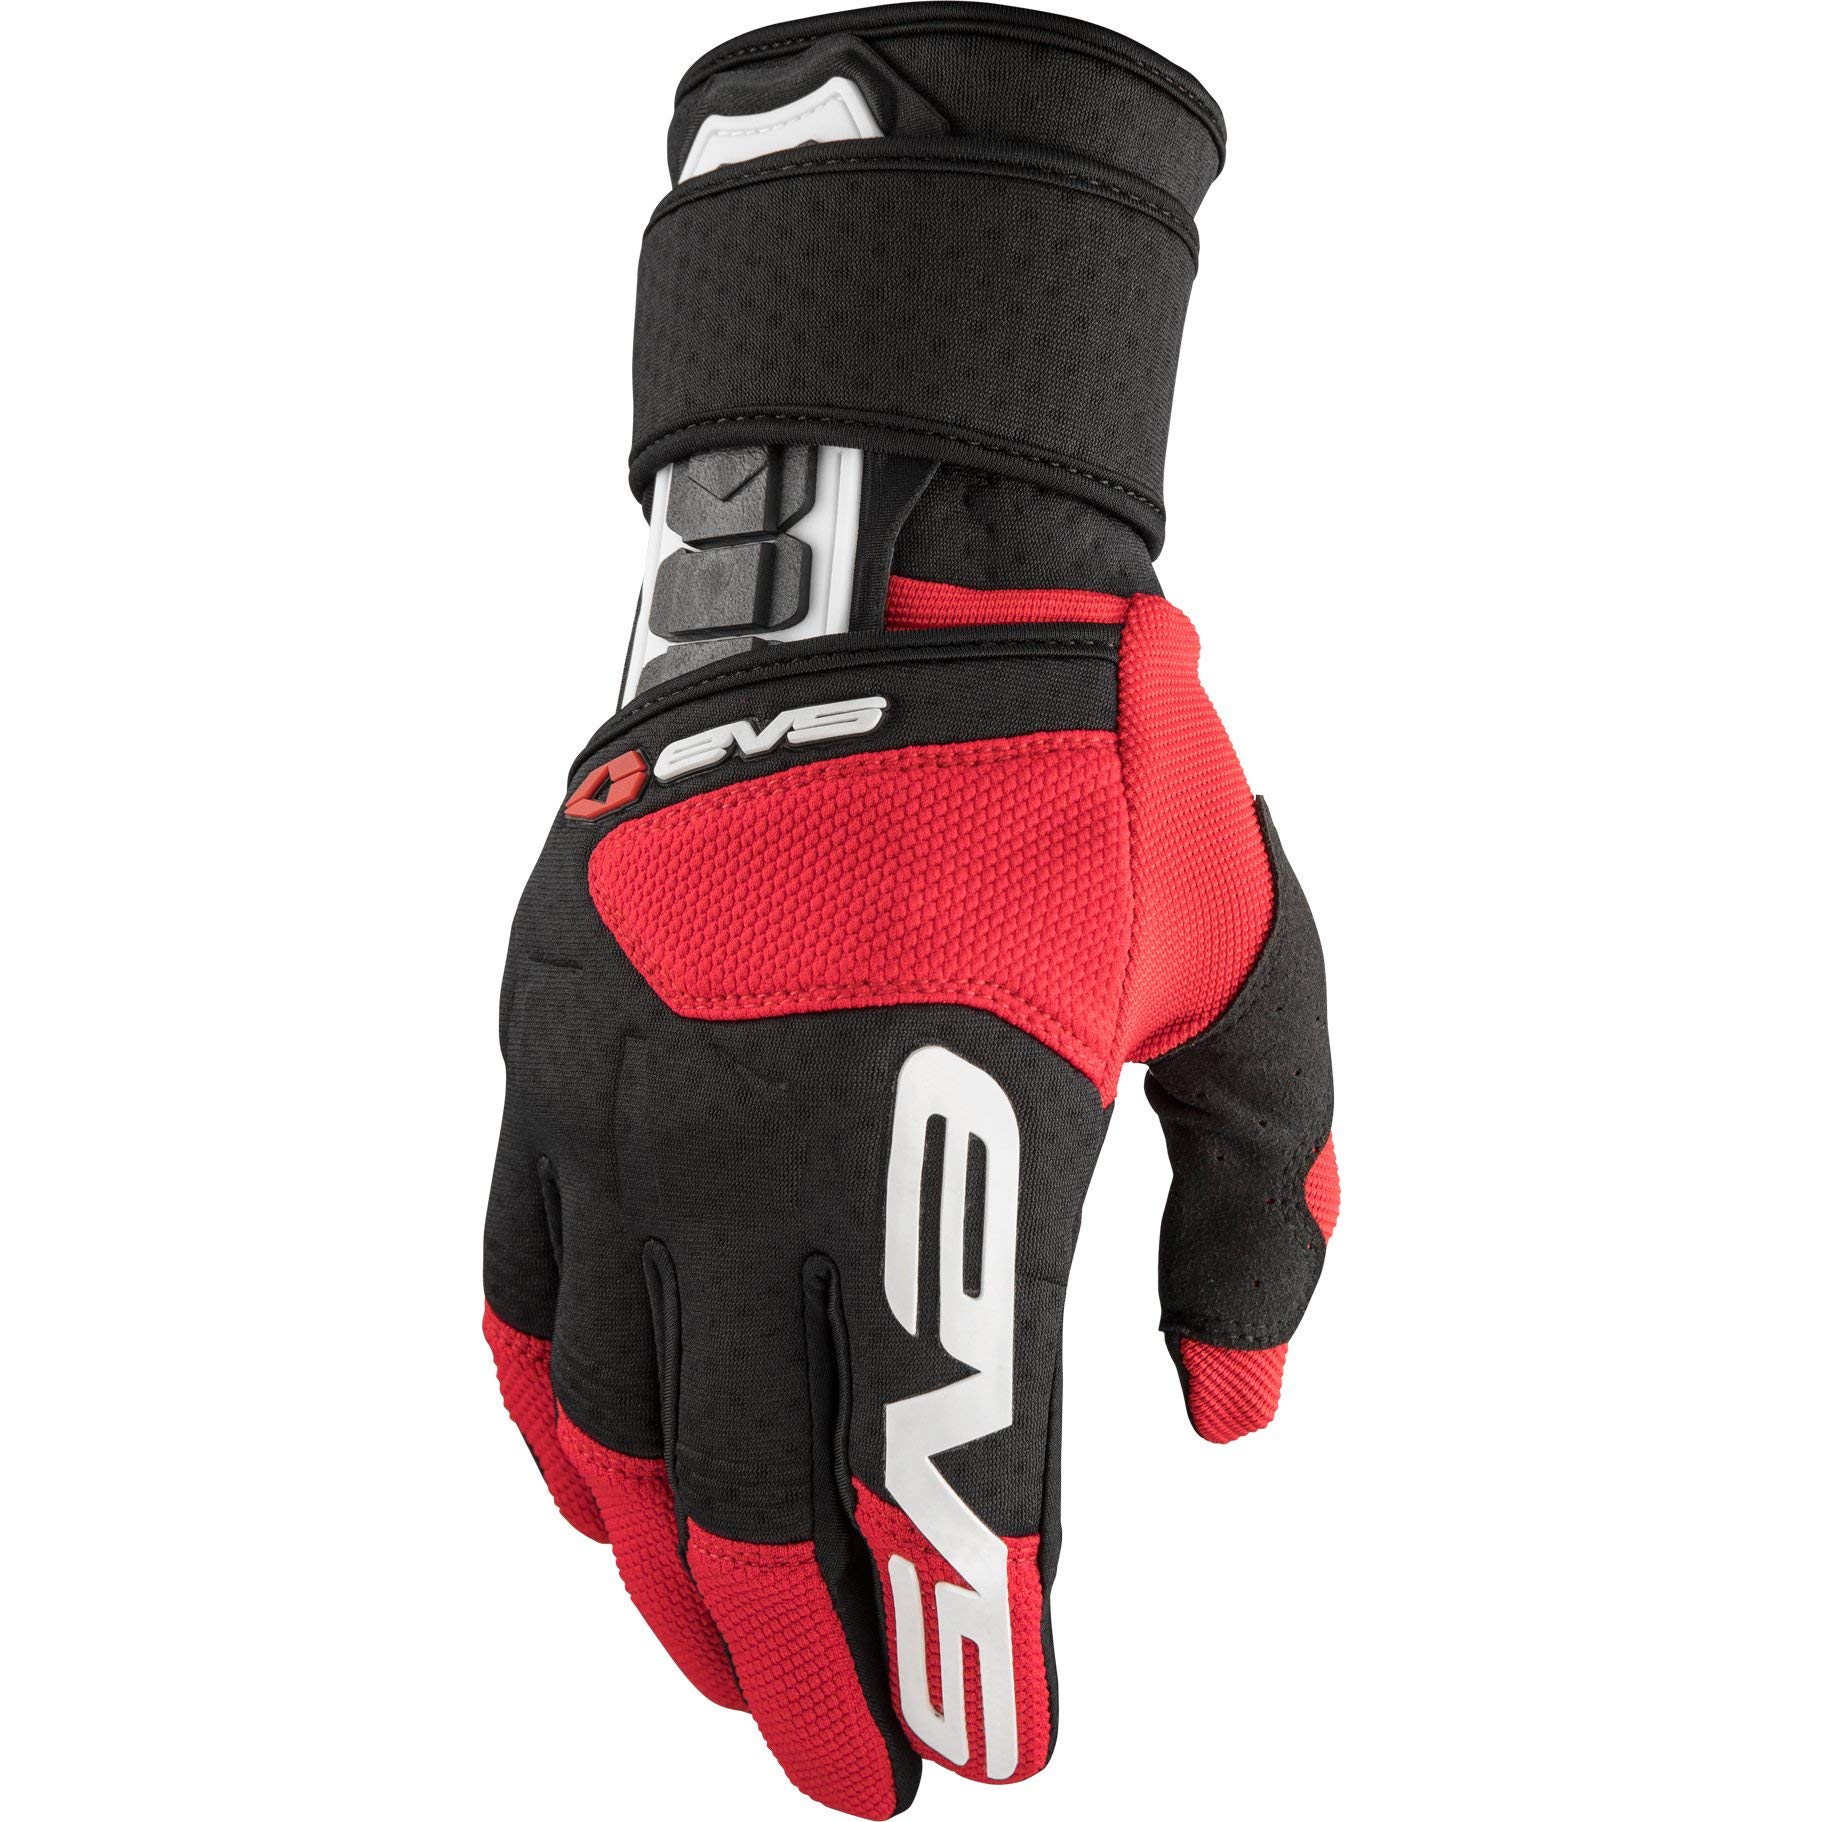 EVS Sports Wrister Glove with Wrist Protection, Adult, M, Black, Größe medium von EVS Sports